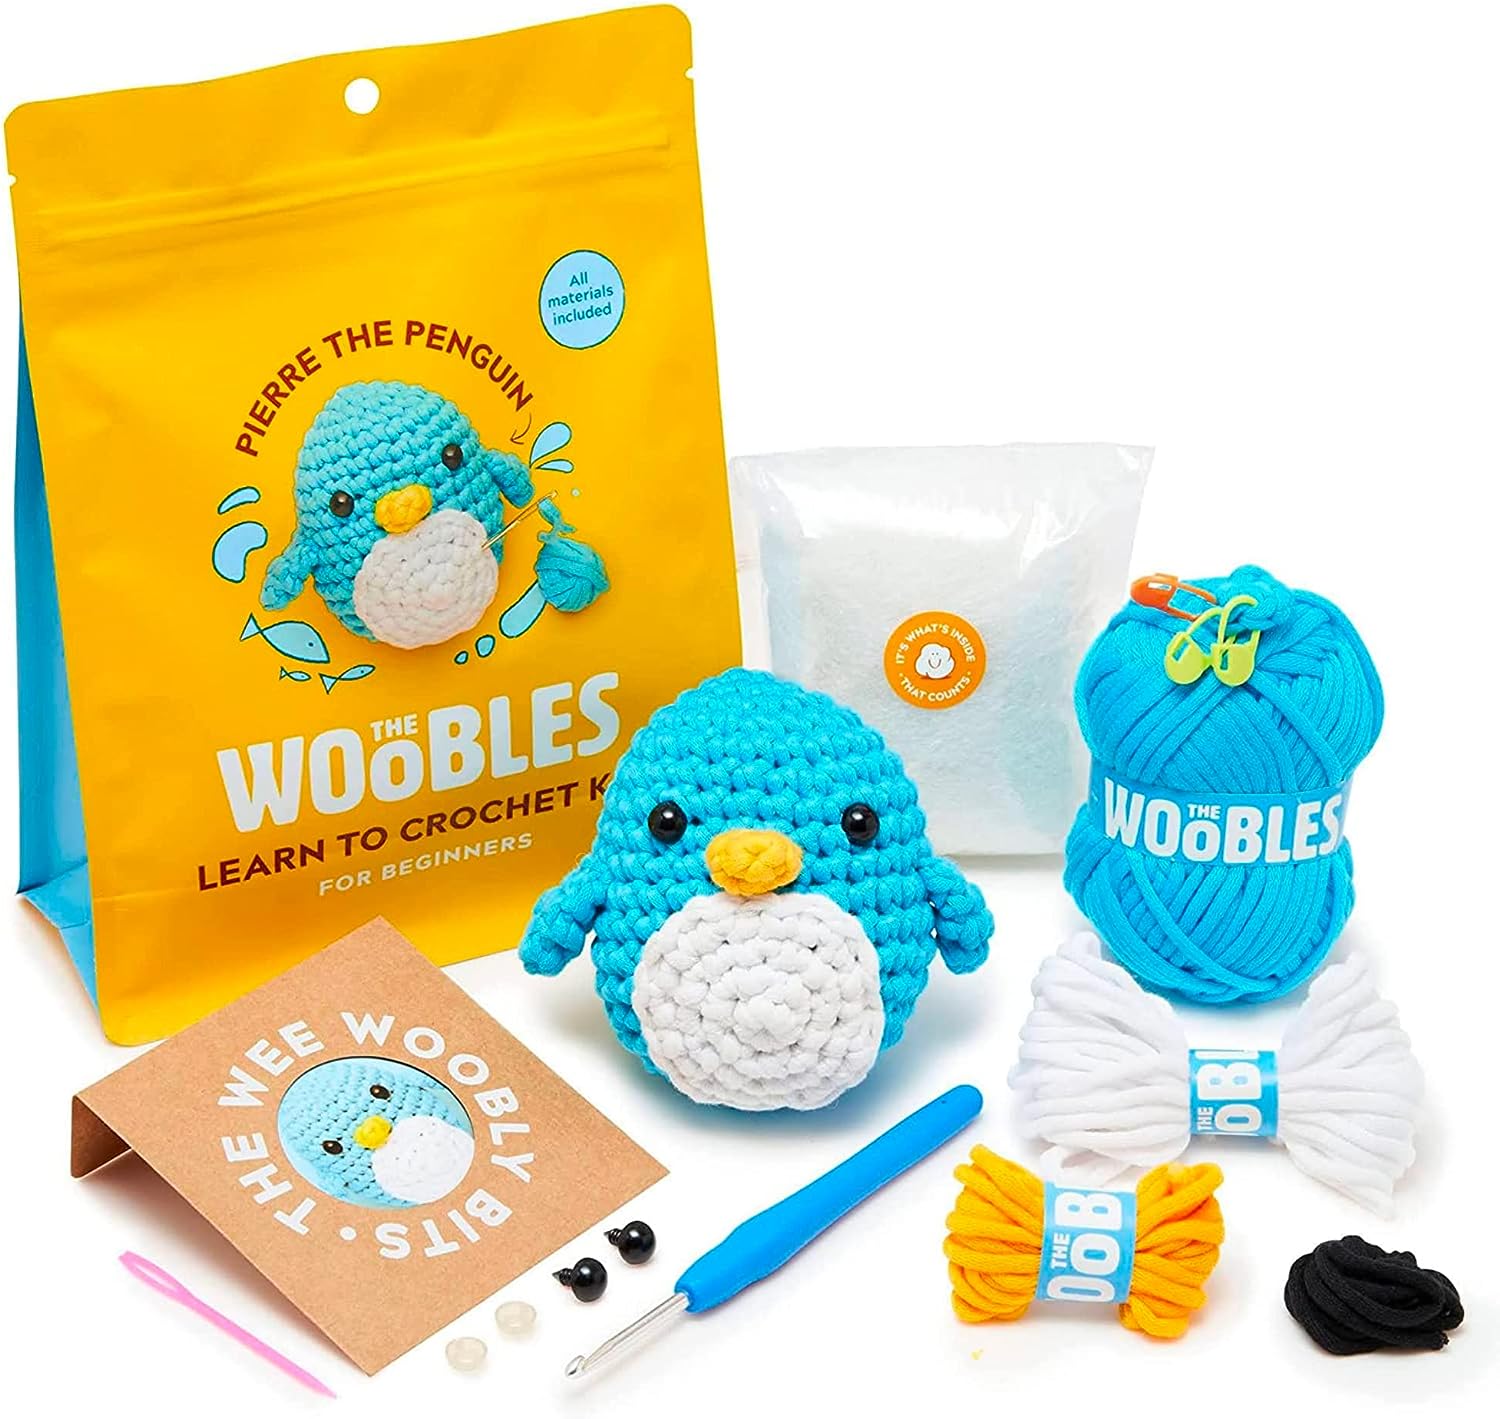 Woobles Crochet Kit: Pierre the Penguin